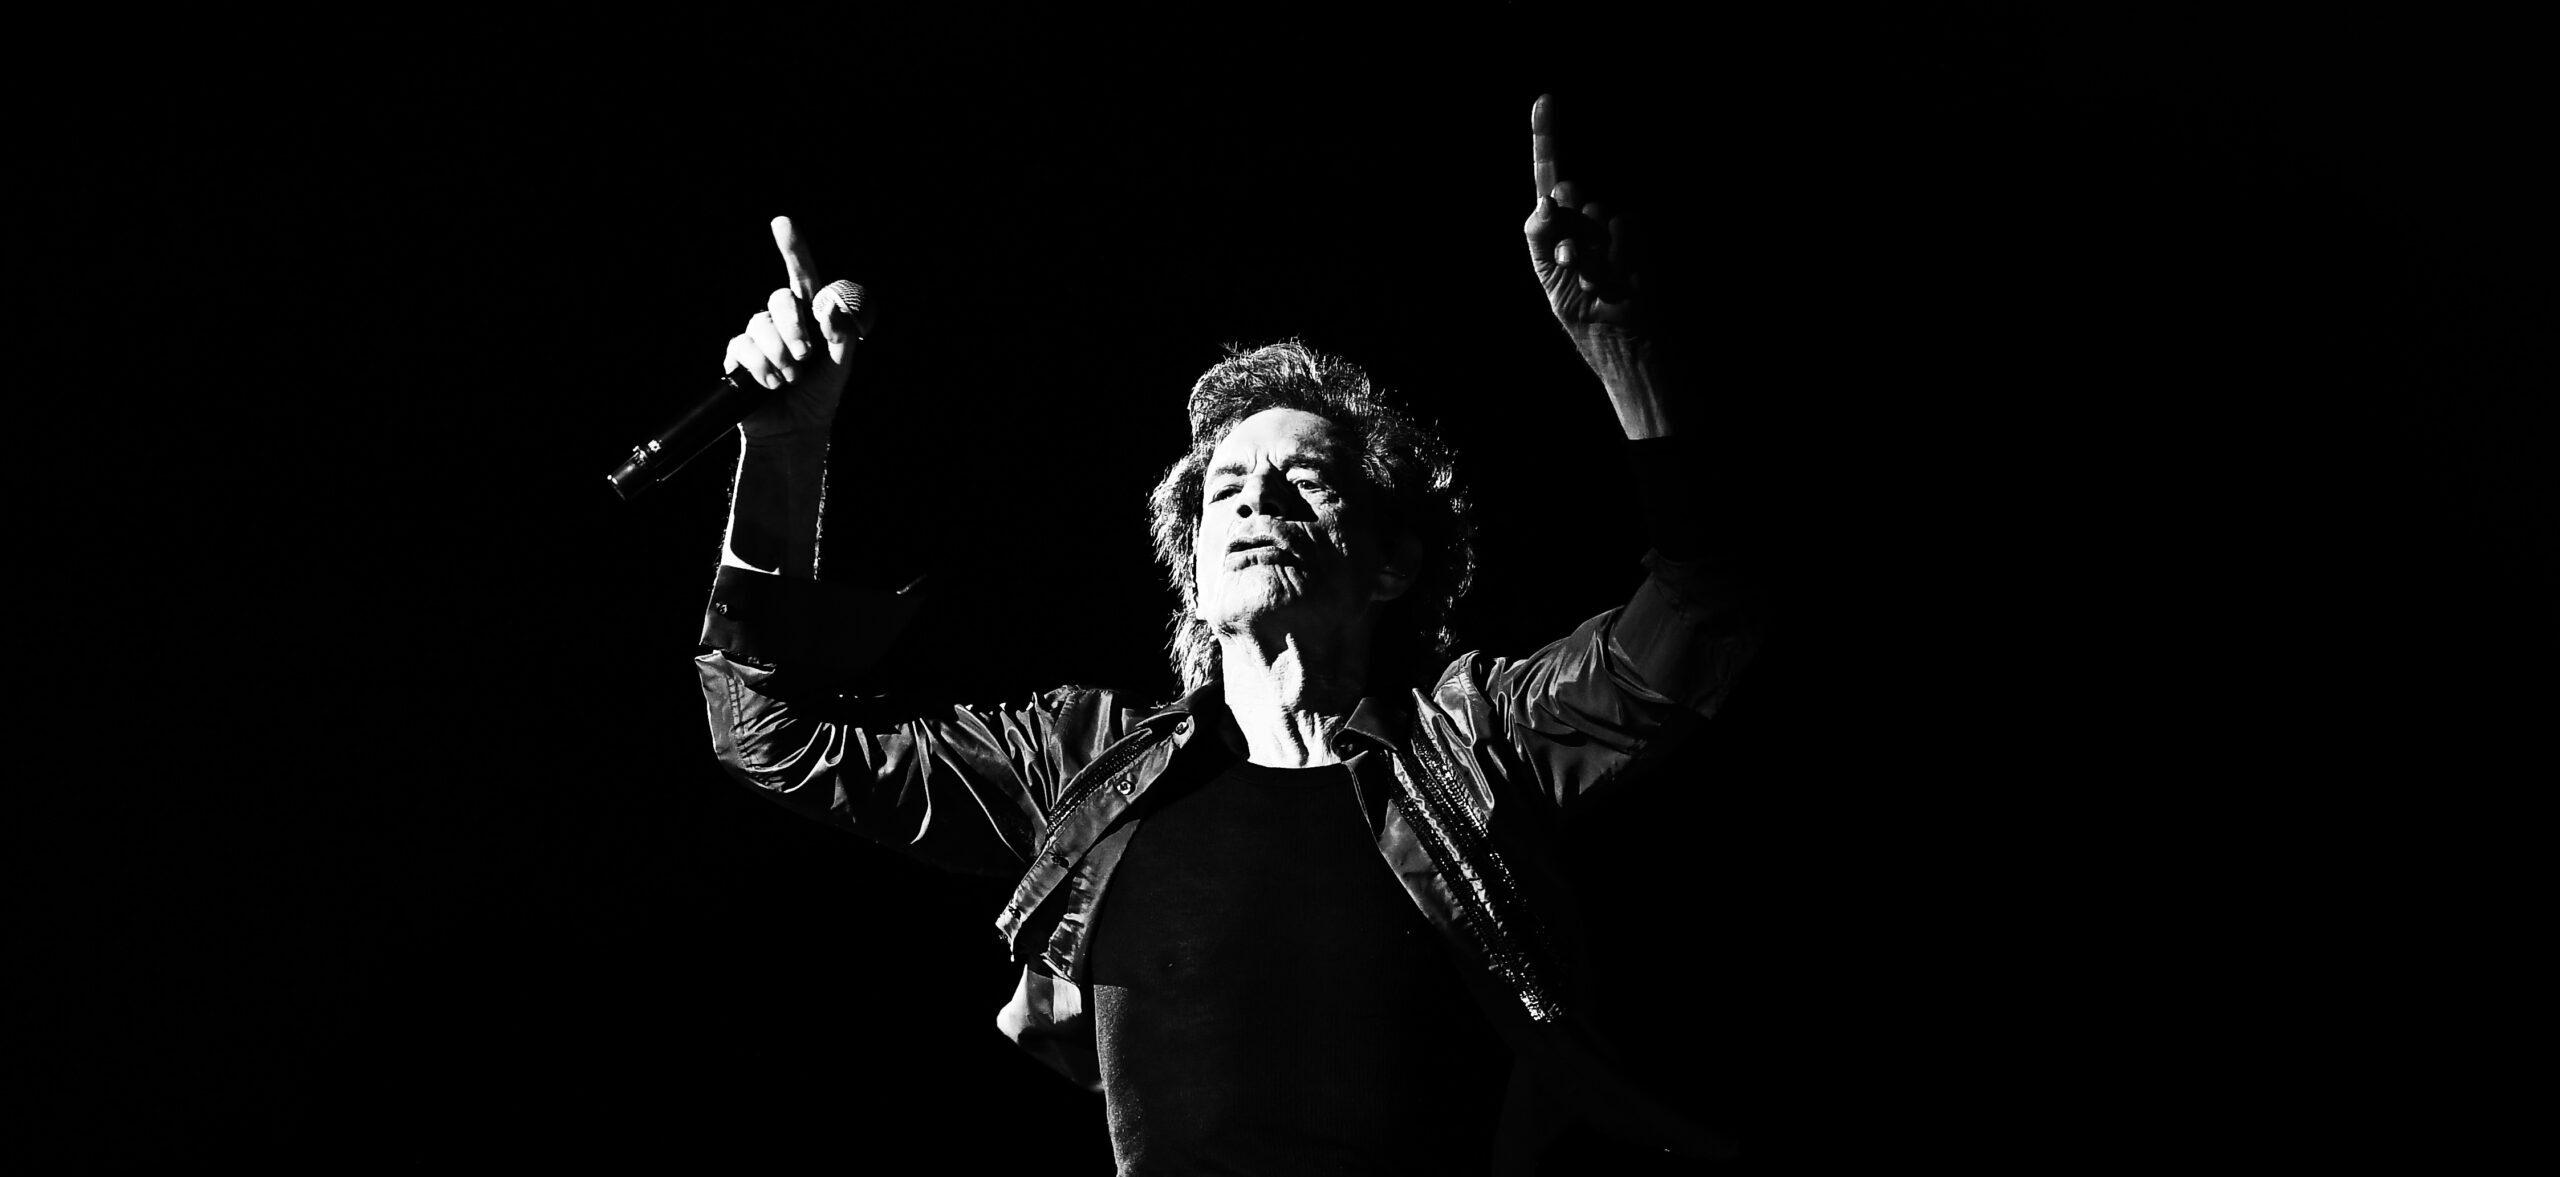 Rolling Stones Frontman Mick Jagger Celebrates 80th Birthday!